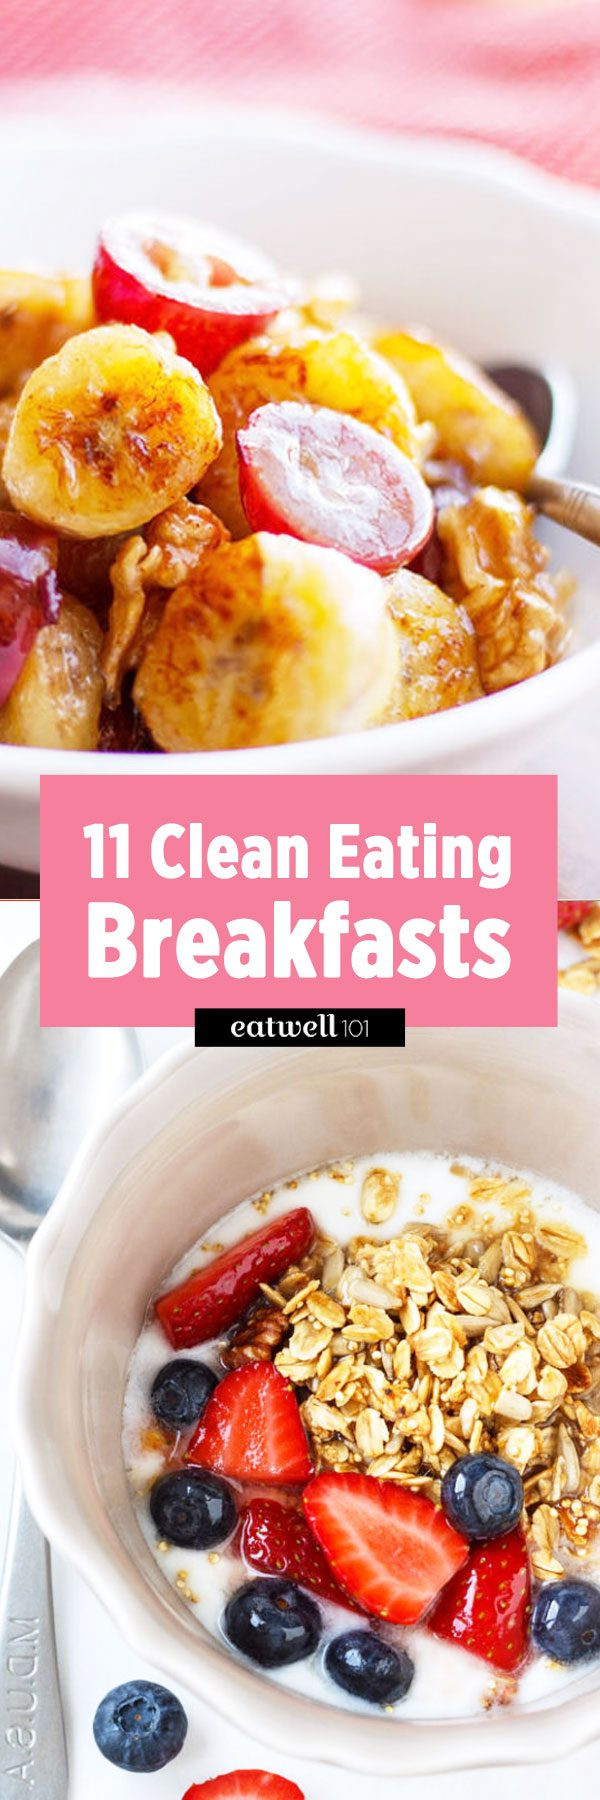 Clean Eating Breakfast Recipes
 Clean Eating Breakfast Recipes — Eatwell101